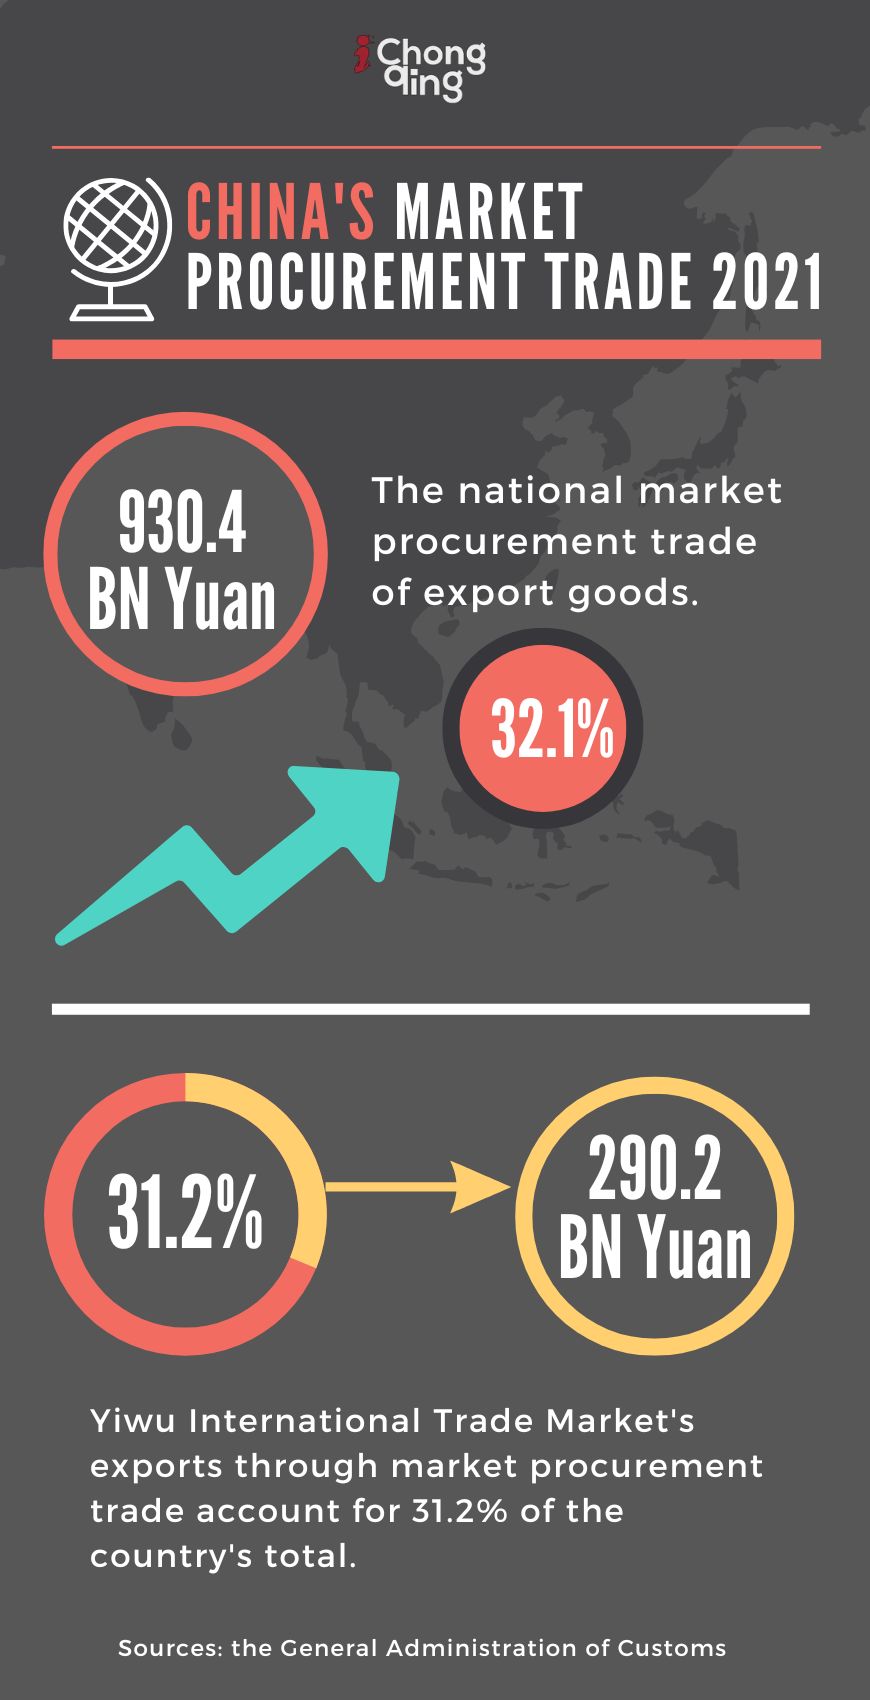 China's market procurement trade 2021